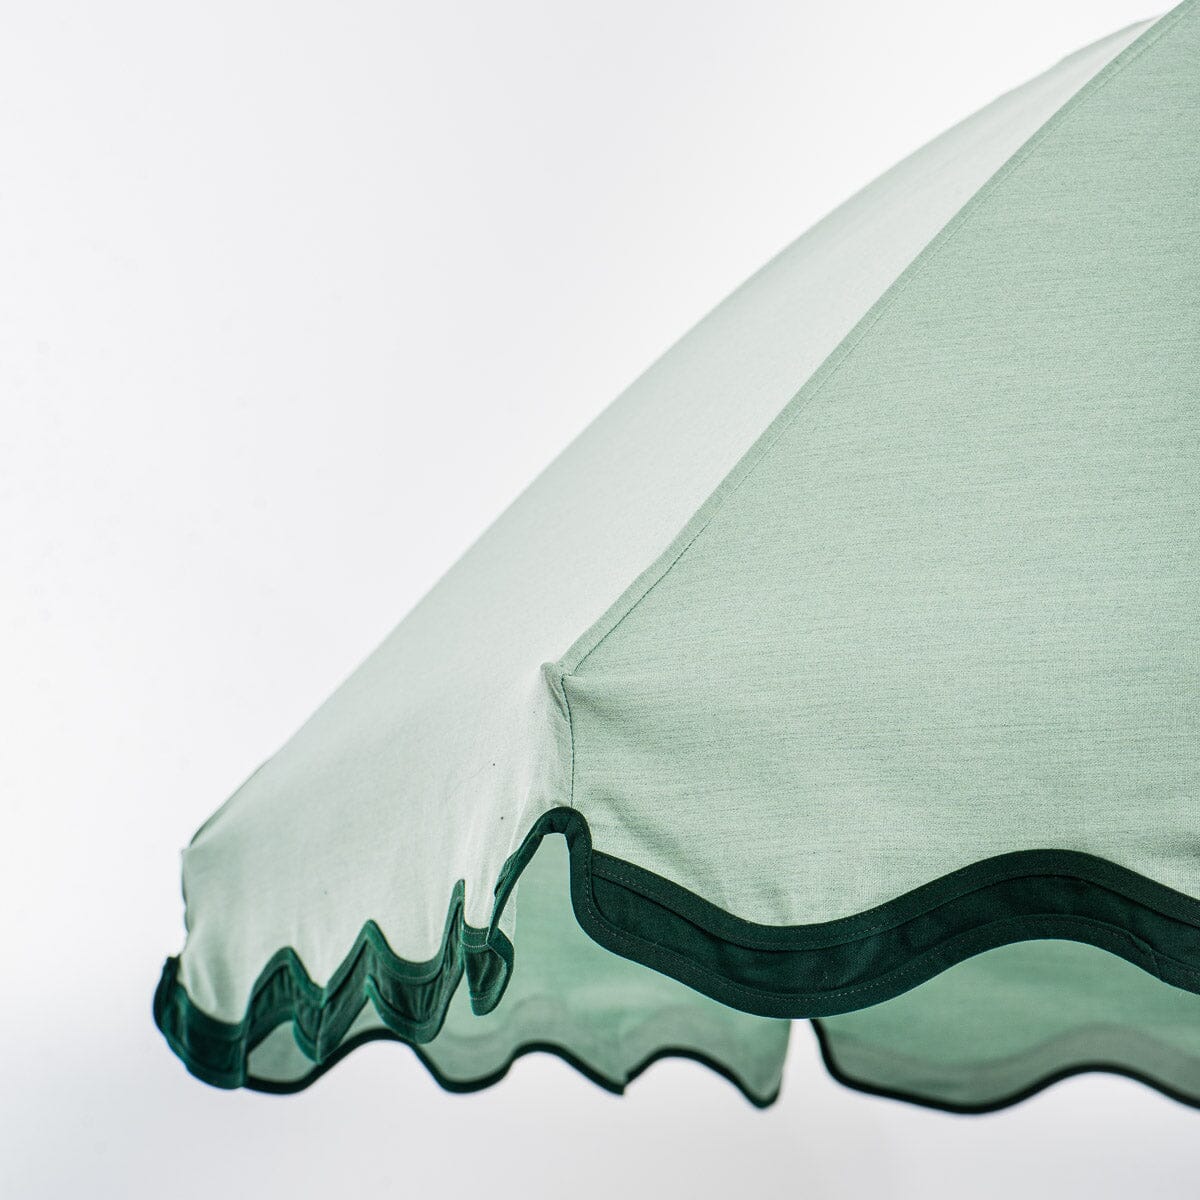 canopy edge detail on green patio umbrella